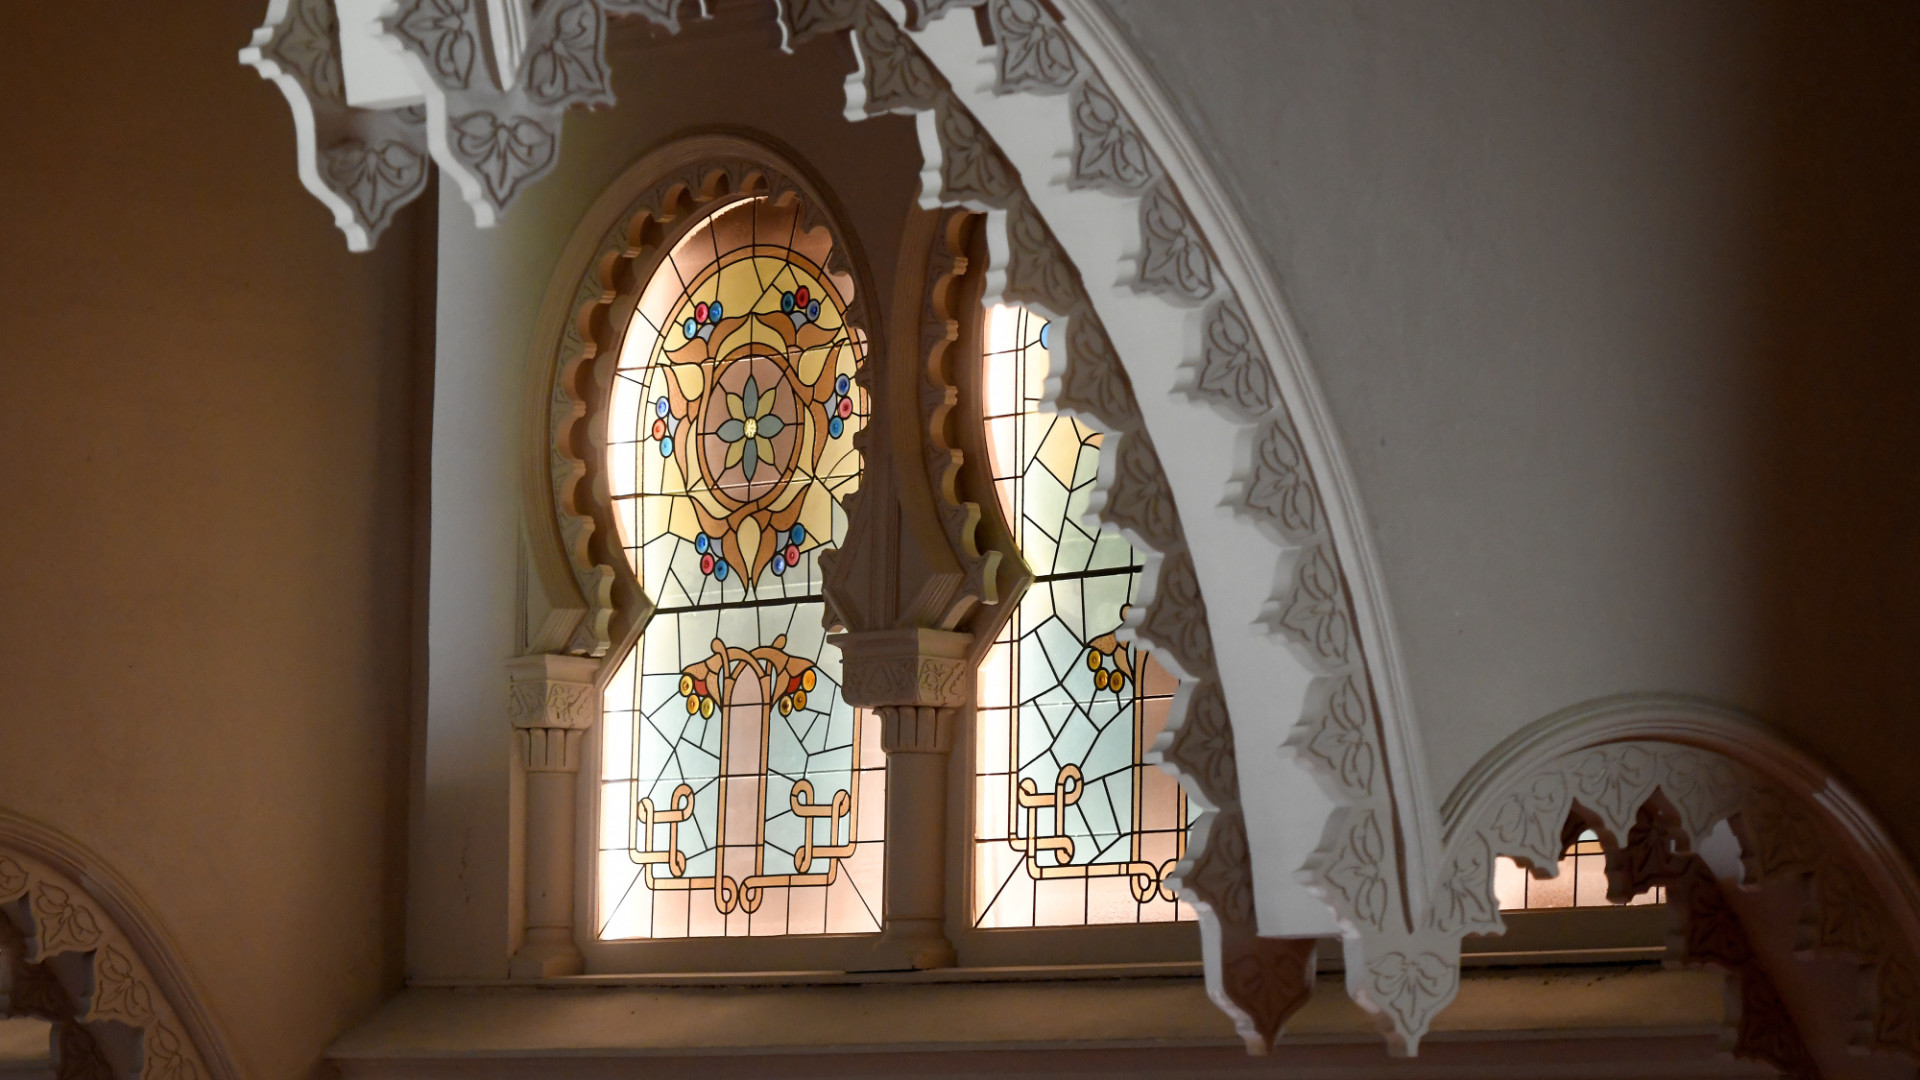 Restored Original Stained Glass Windows